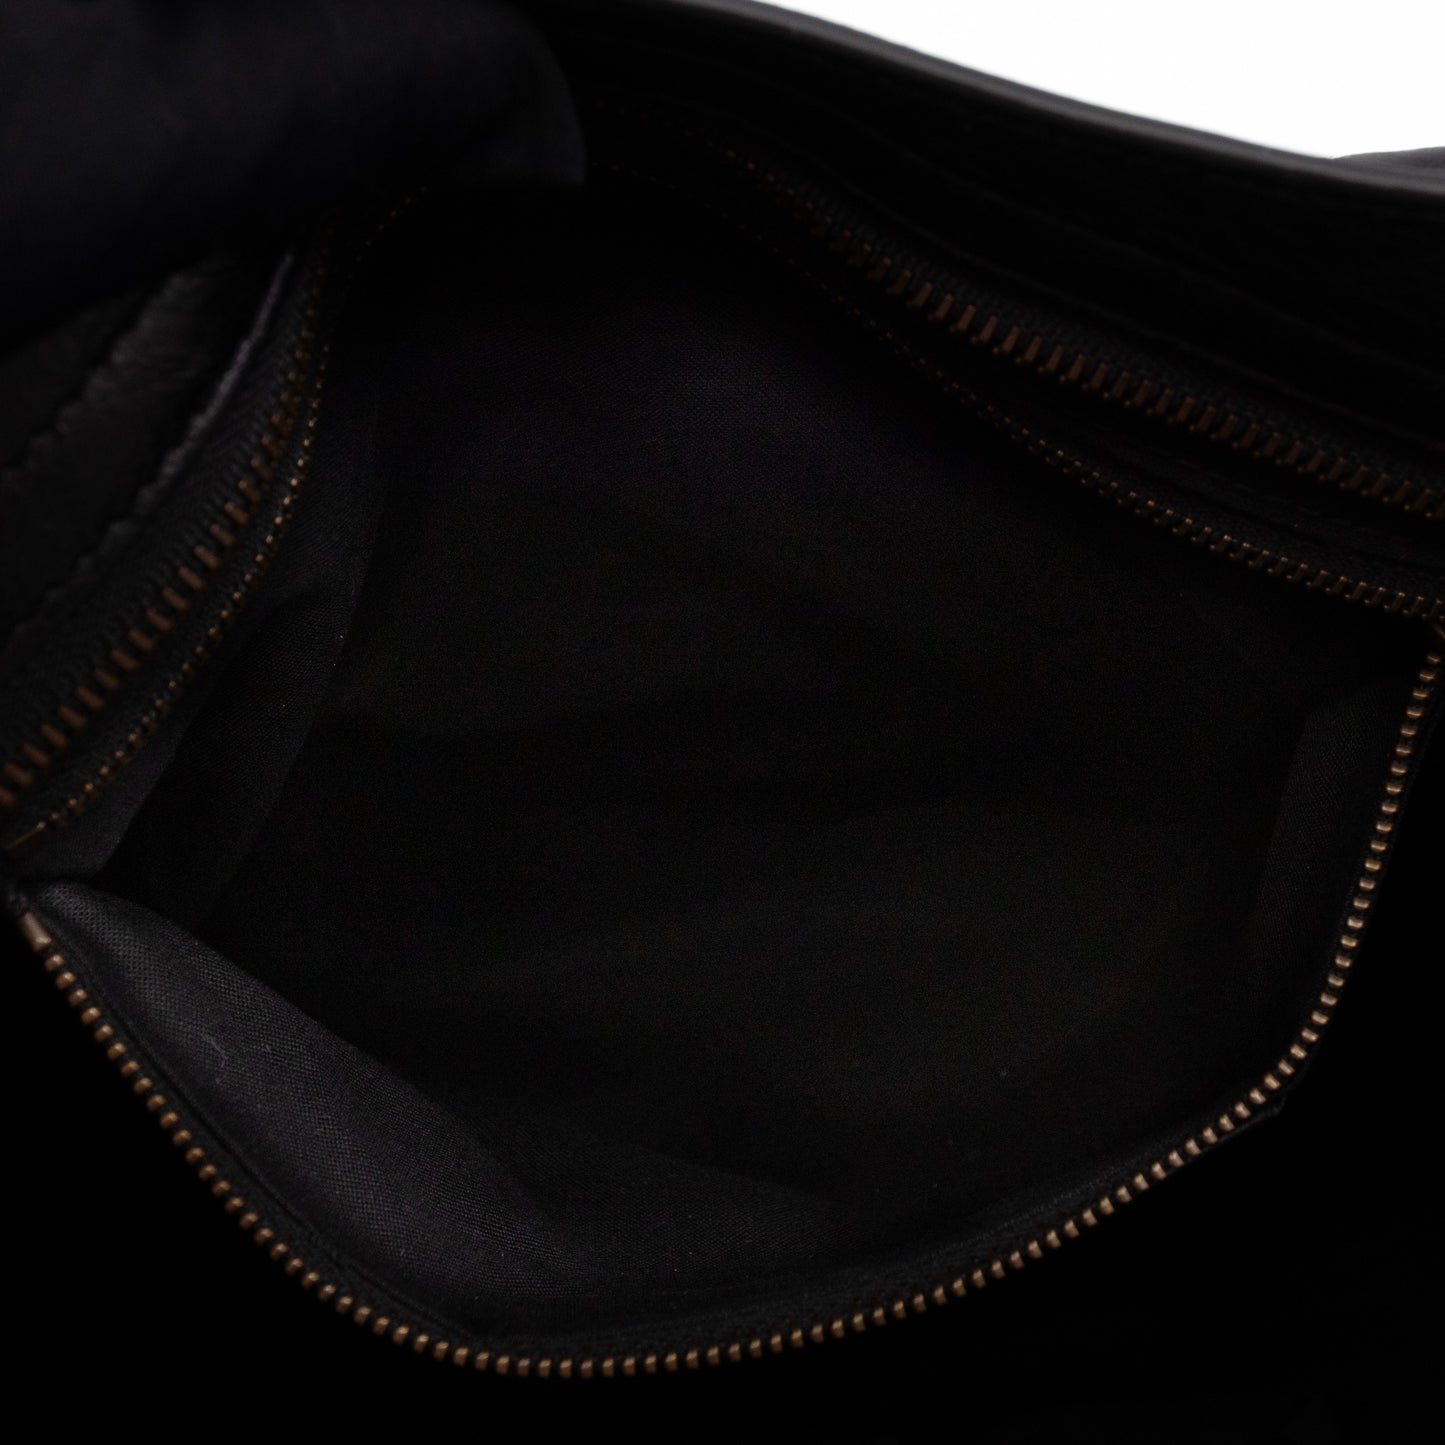 Classic City AJ Bag Logo Strap Black Leather